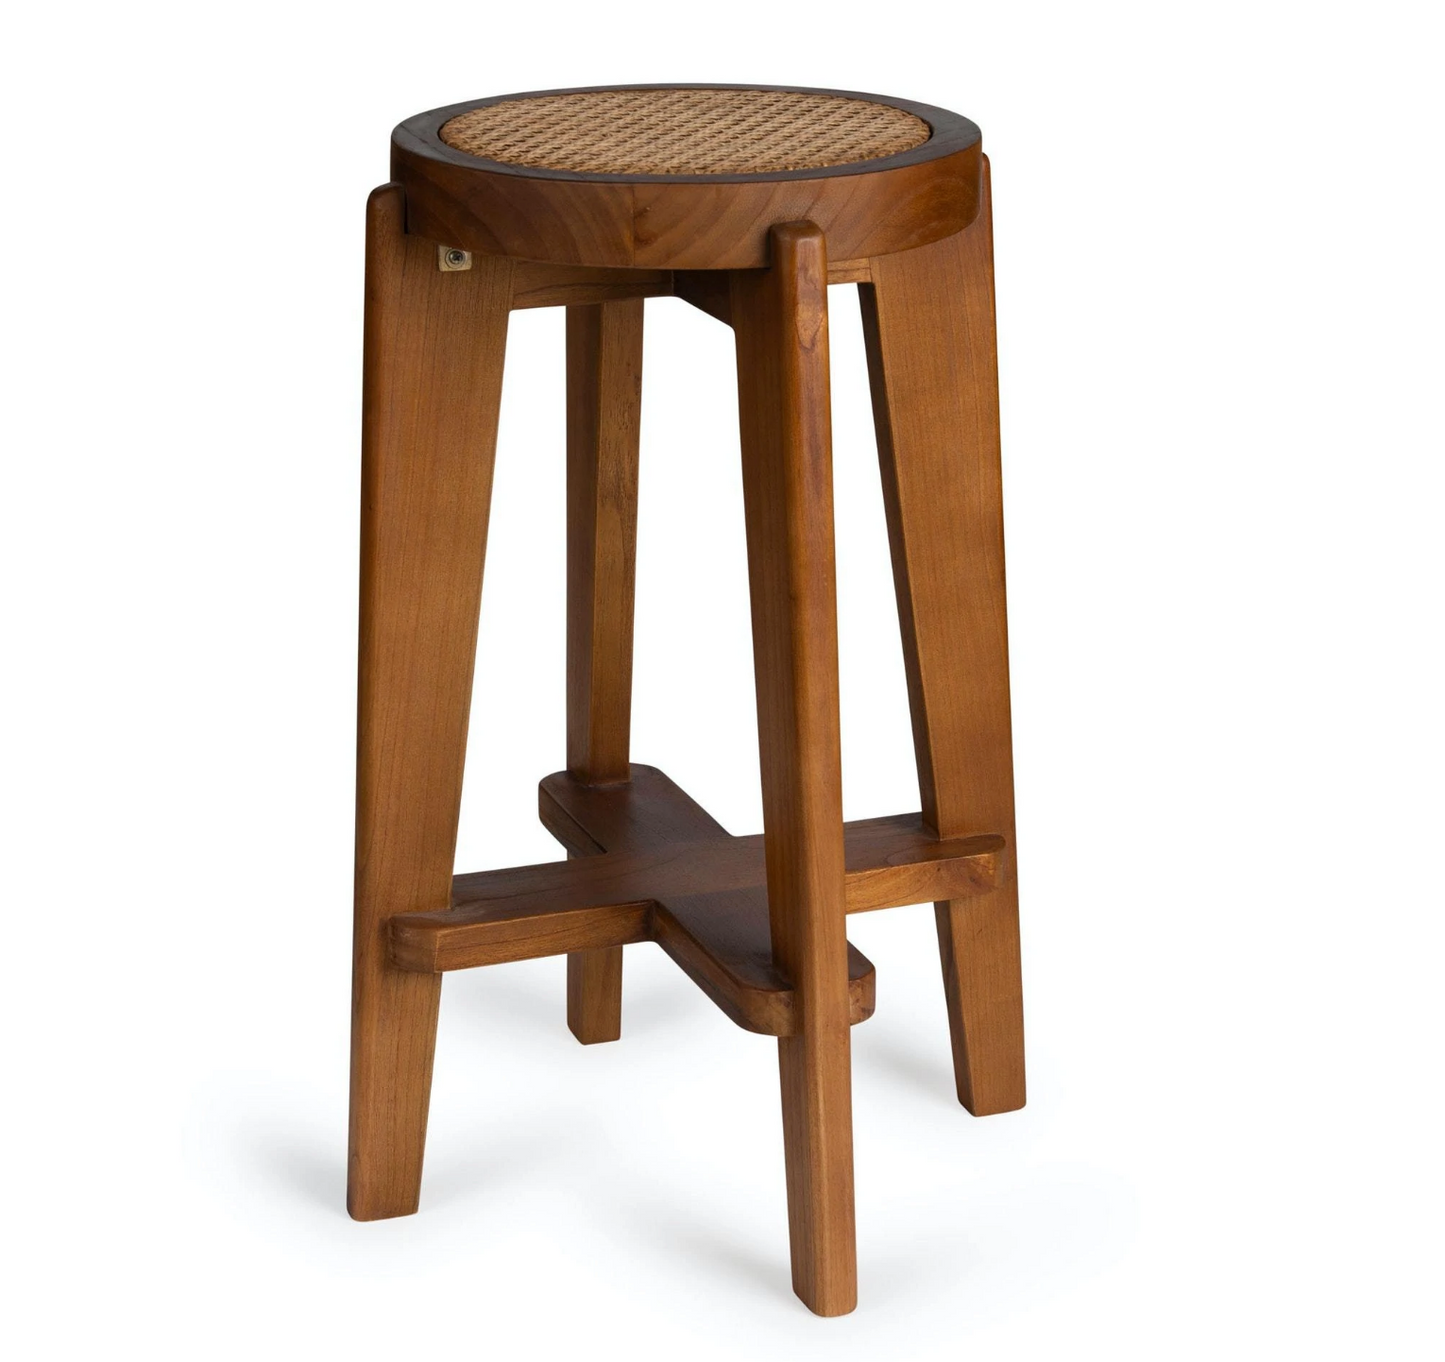 Cane high stool